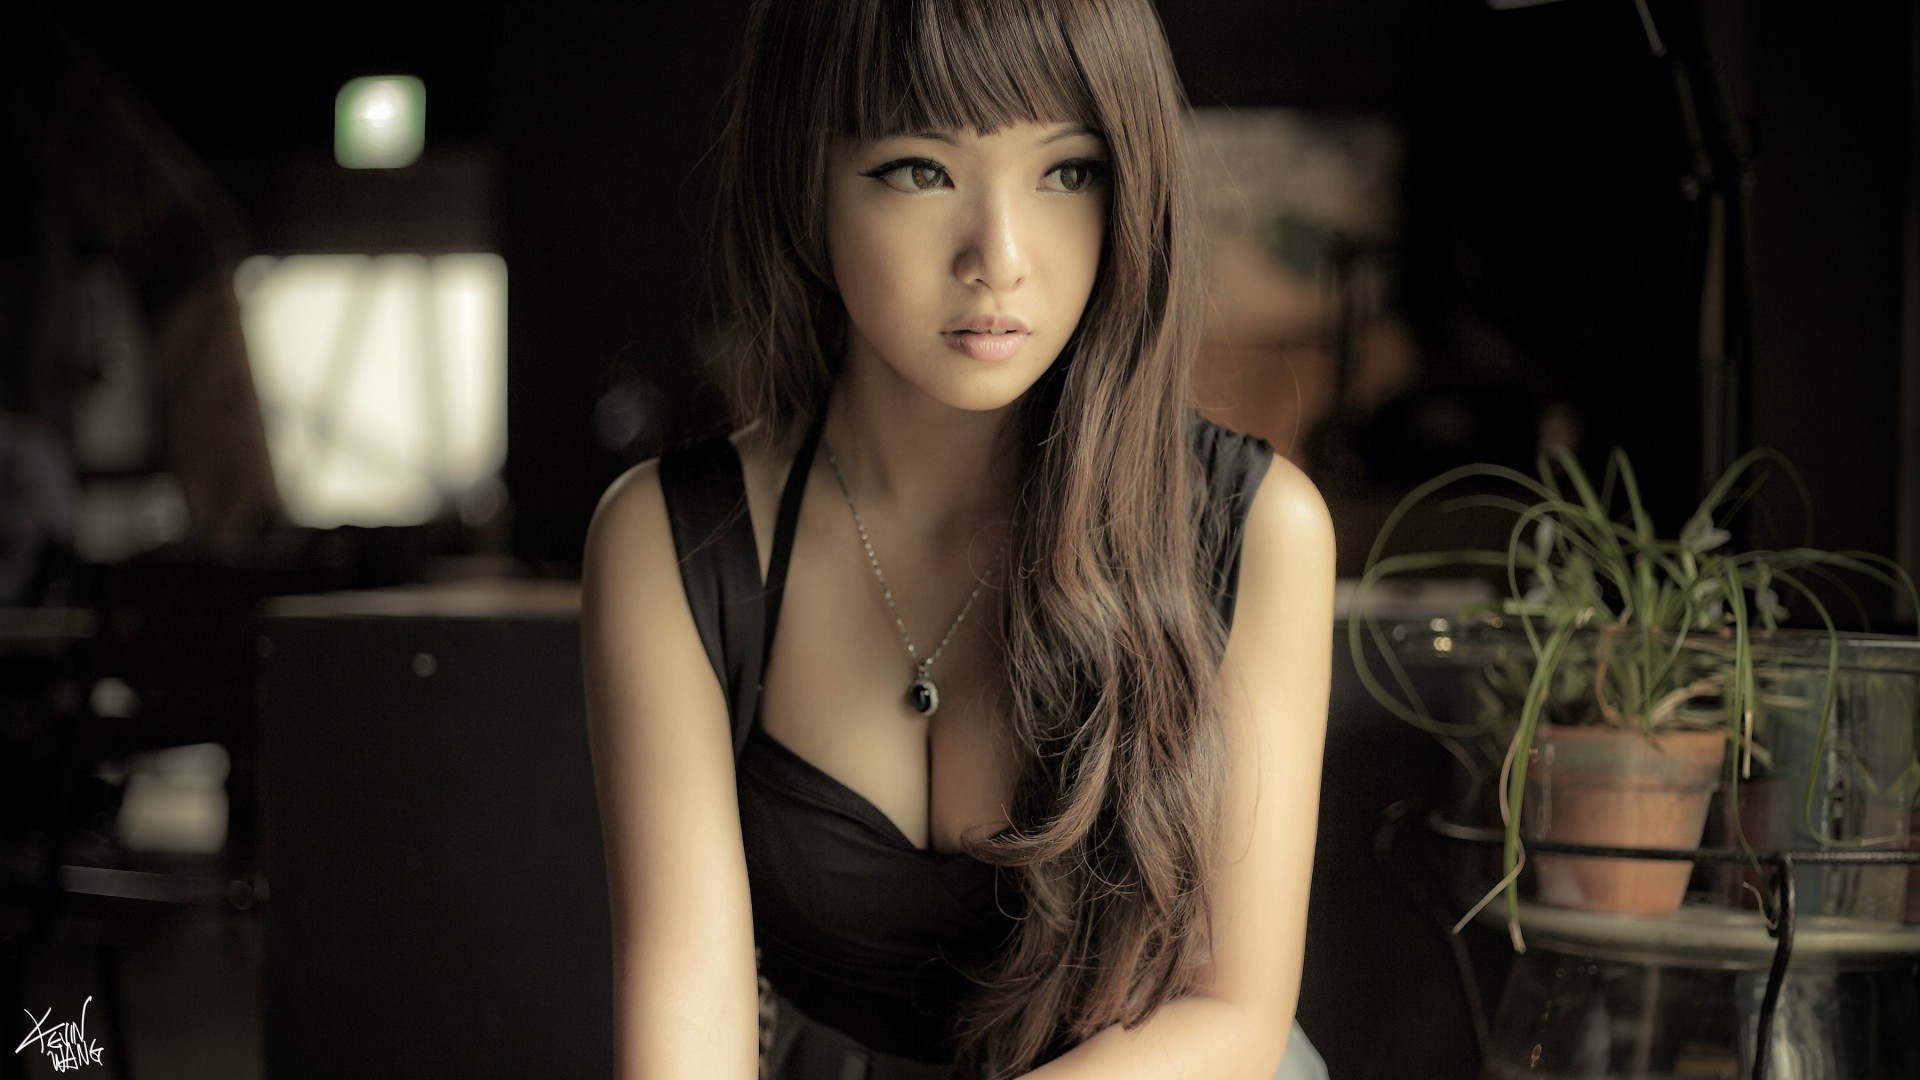 Cissy asia. Азиан герлз. Азиатские девушки. Красивые азиатки. Красивые девушки Азии.